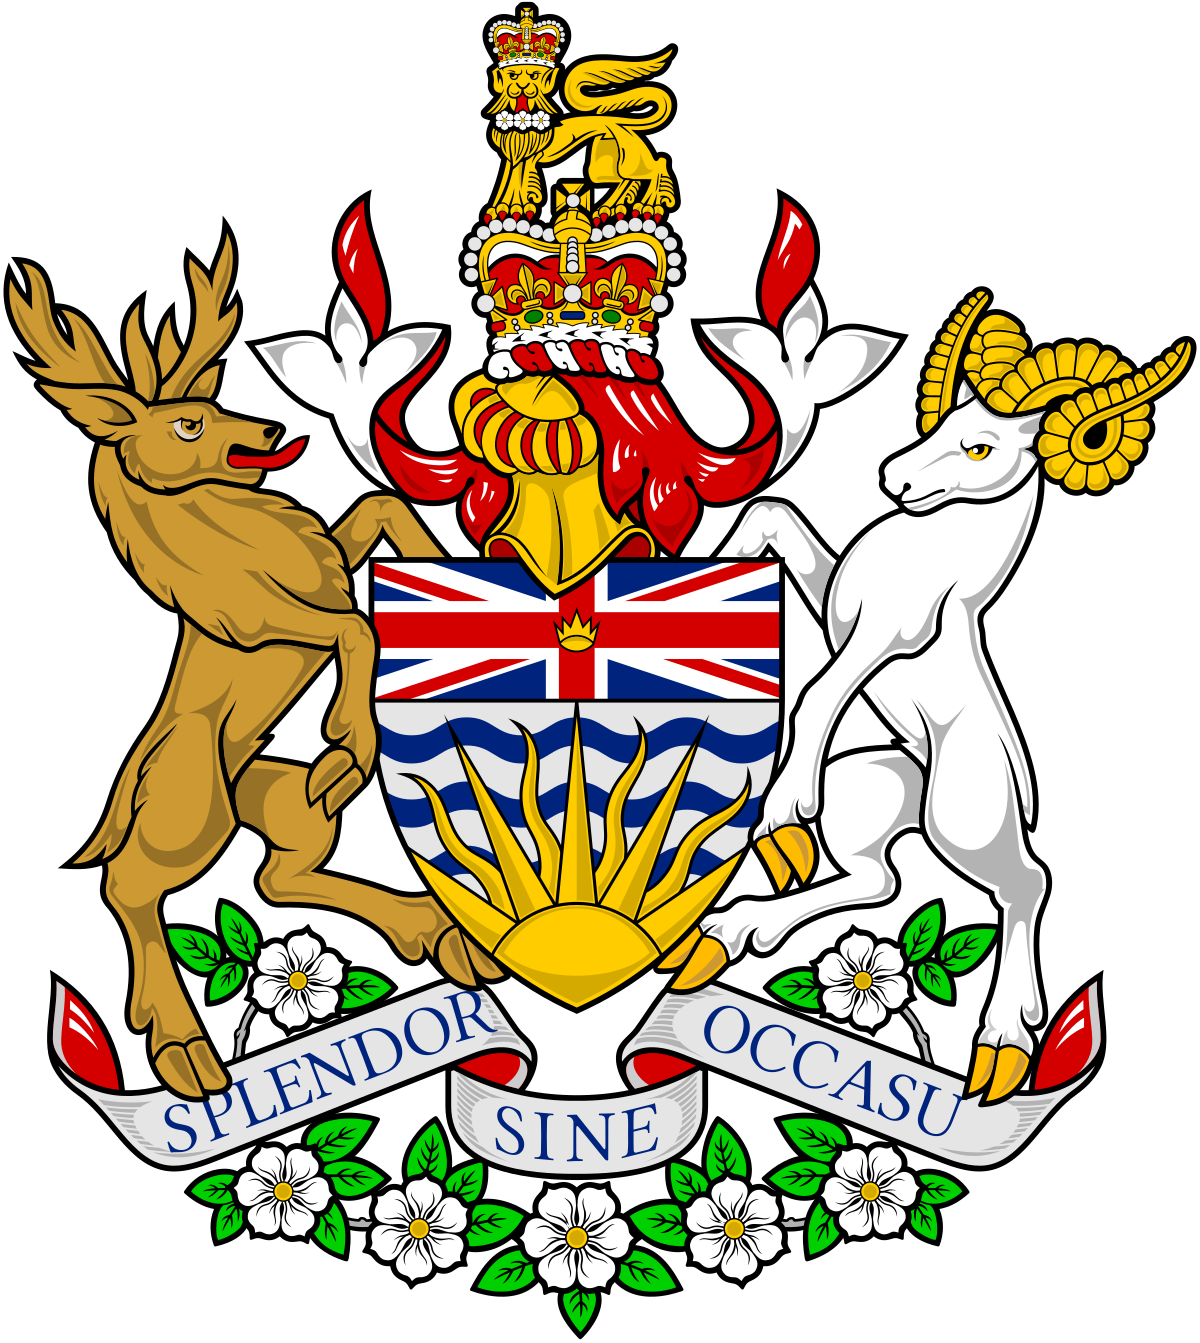 University of British Columbia - Wikipedia